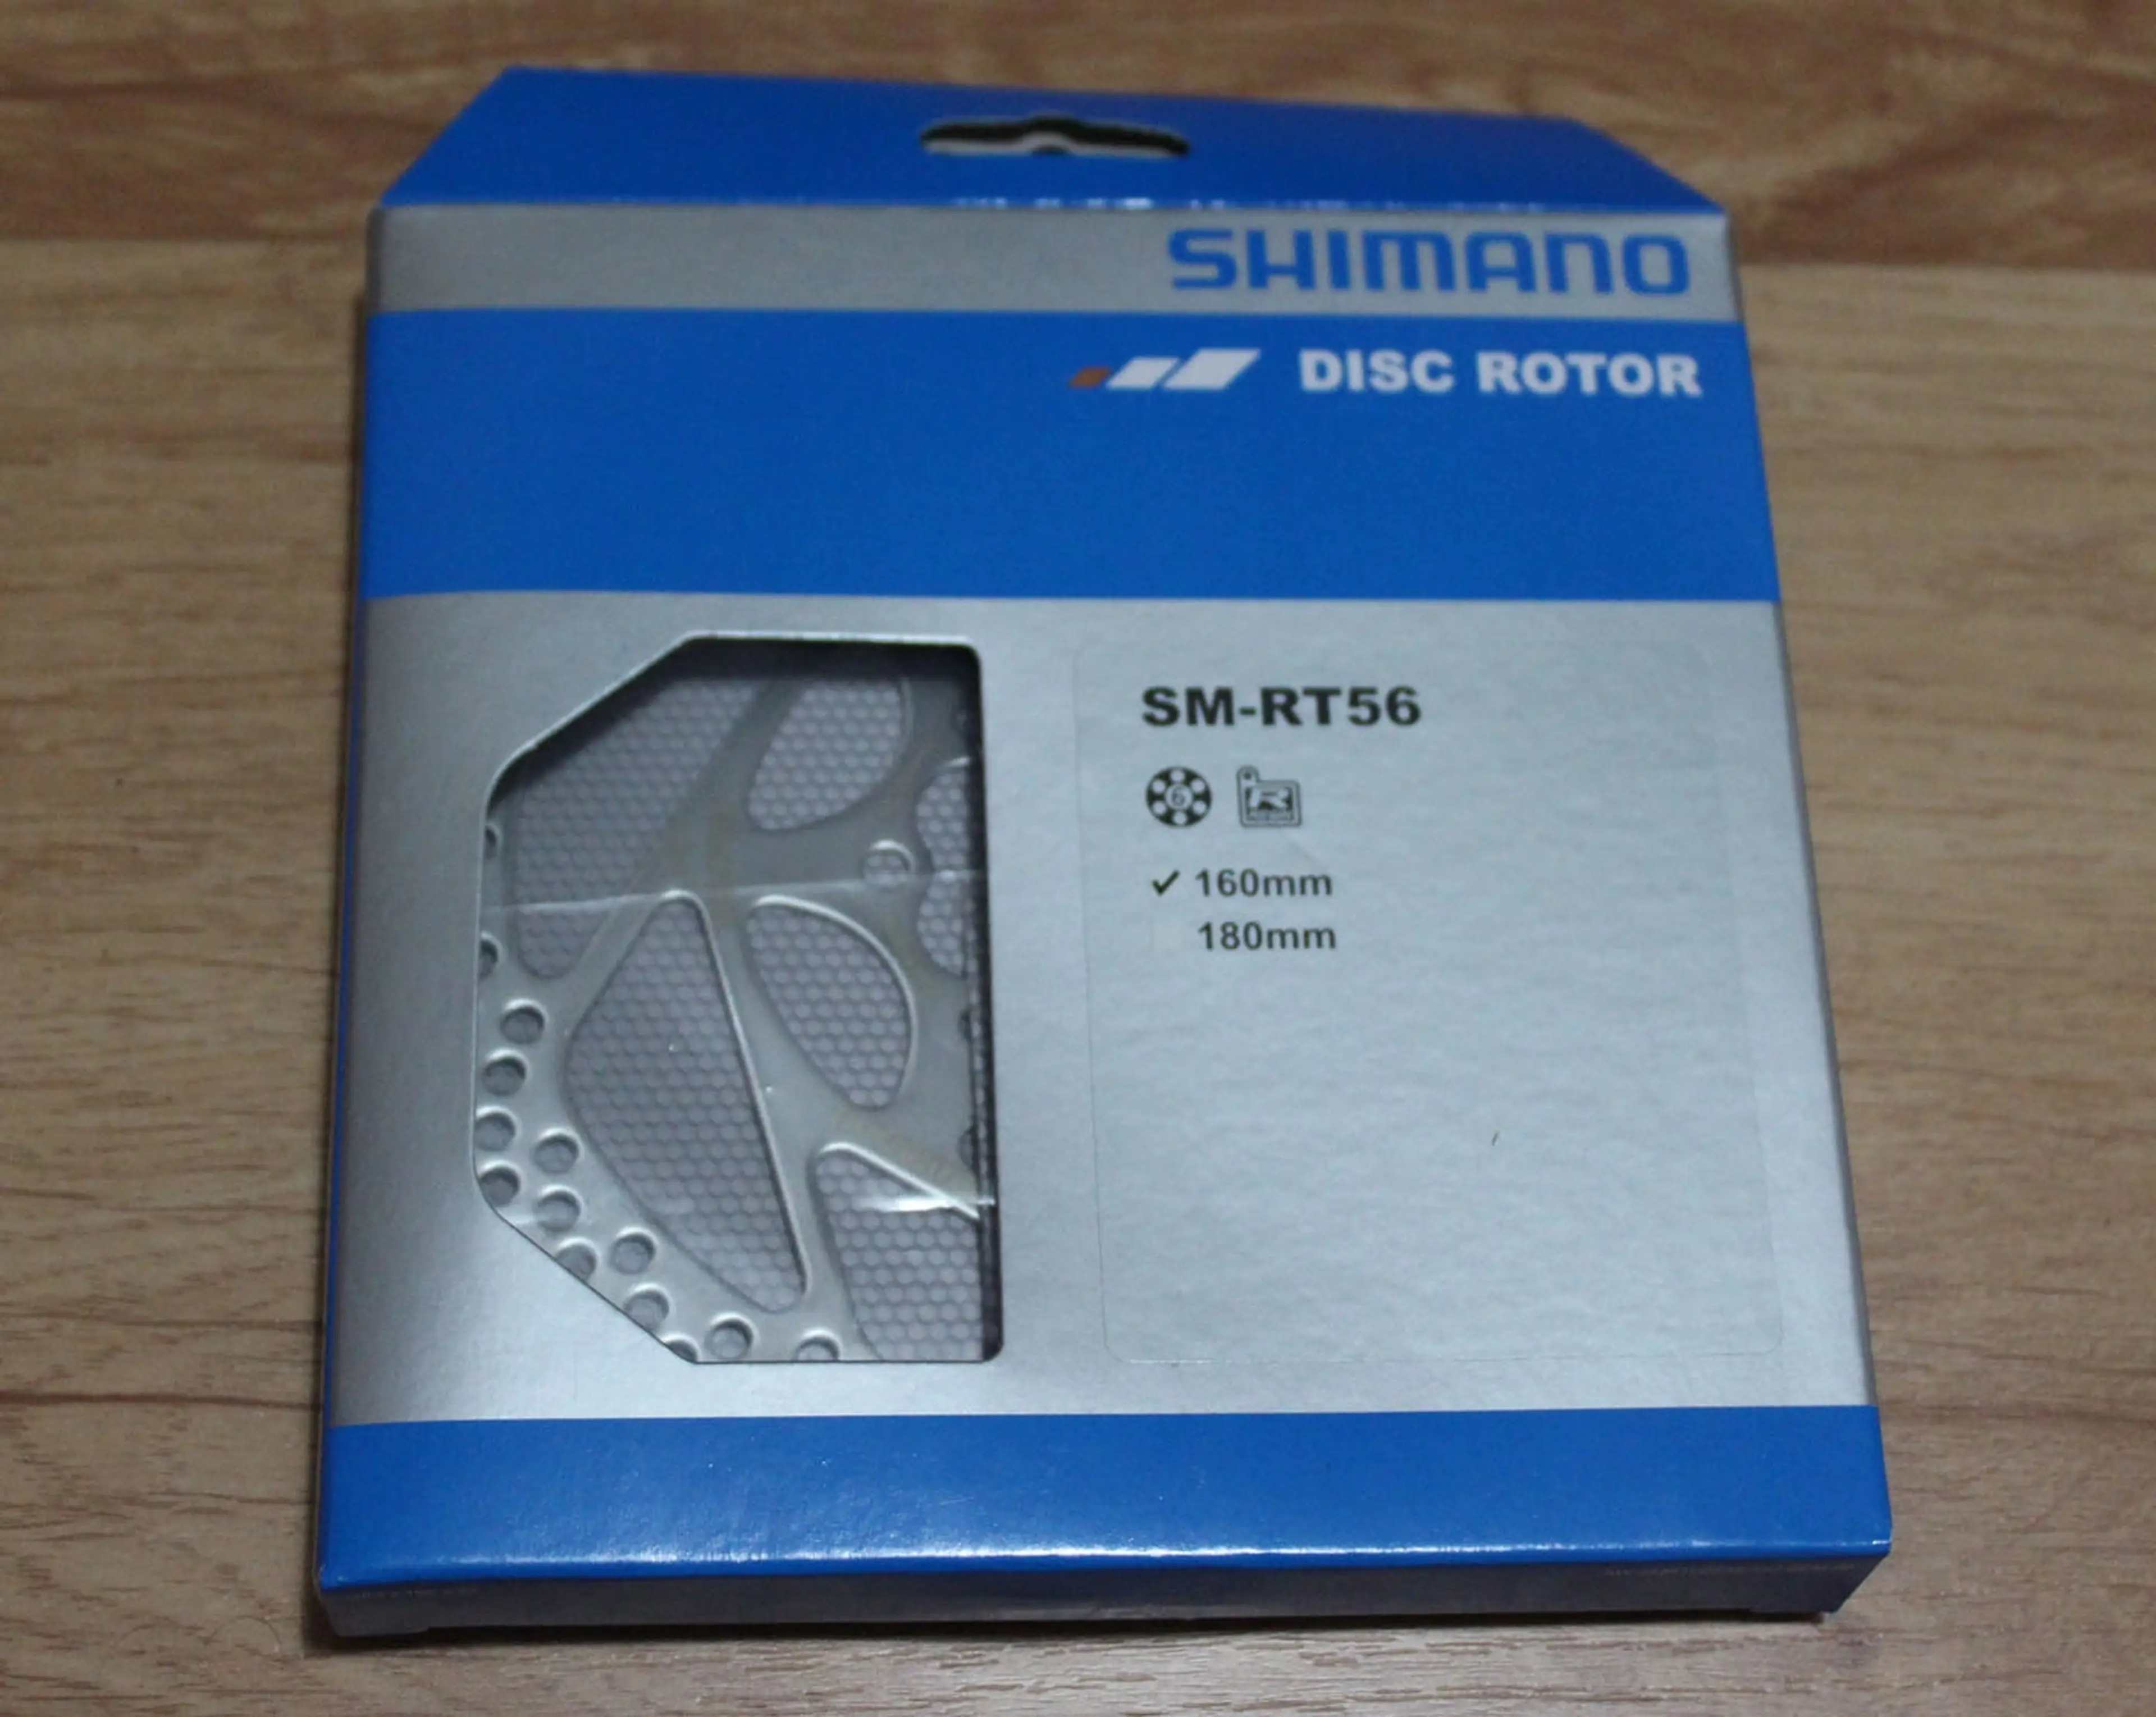 1. Shimano SM-RT56S 160mm disc